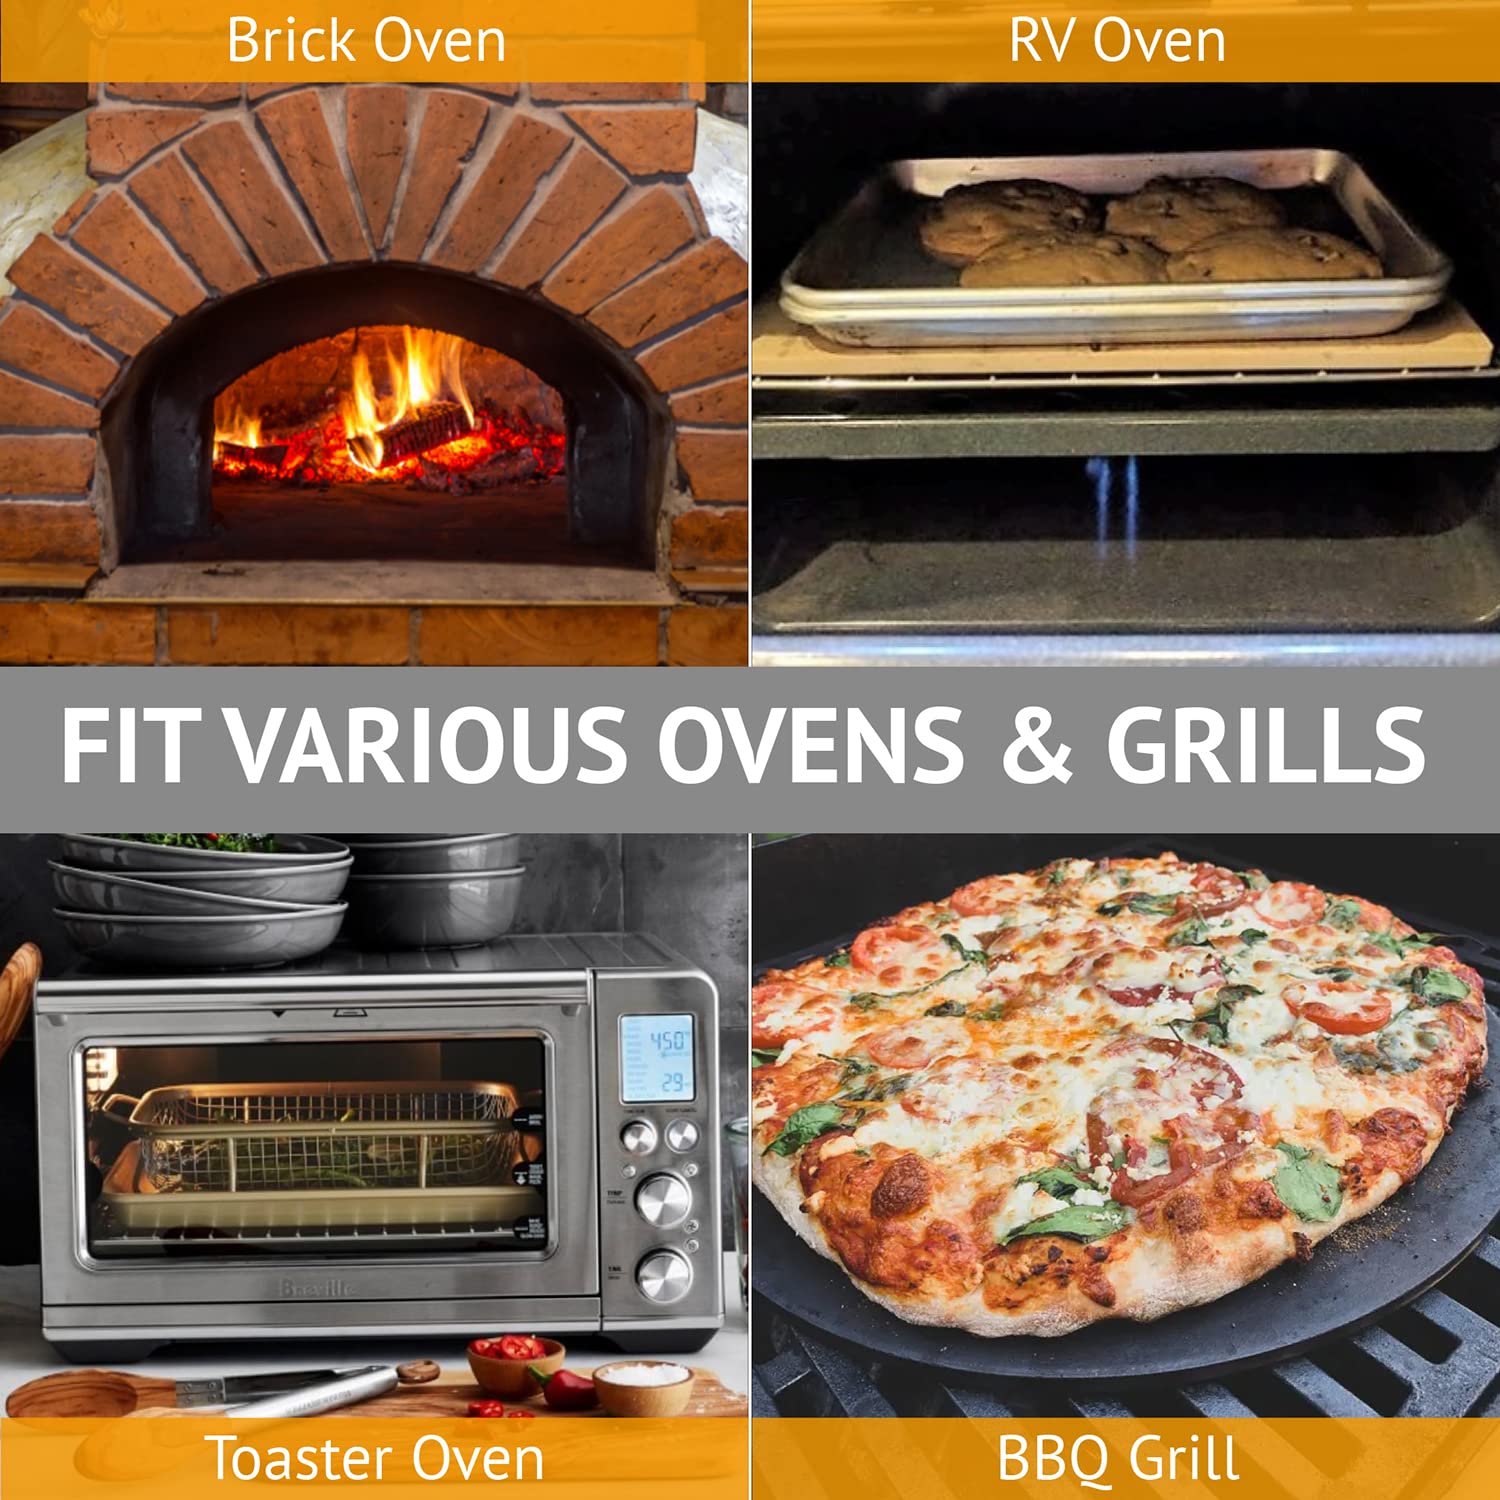 waykea 12” Round Pizza Stone for Grill, Oven or RV Oven | Cordierite Grilling Stone Bread Baking Stone